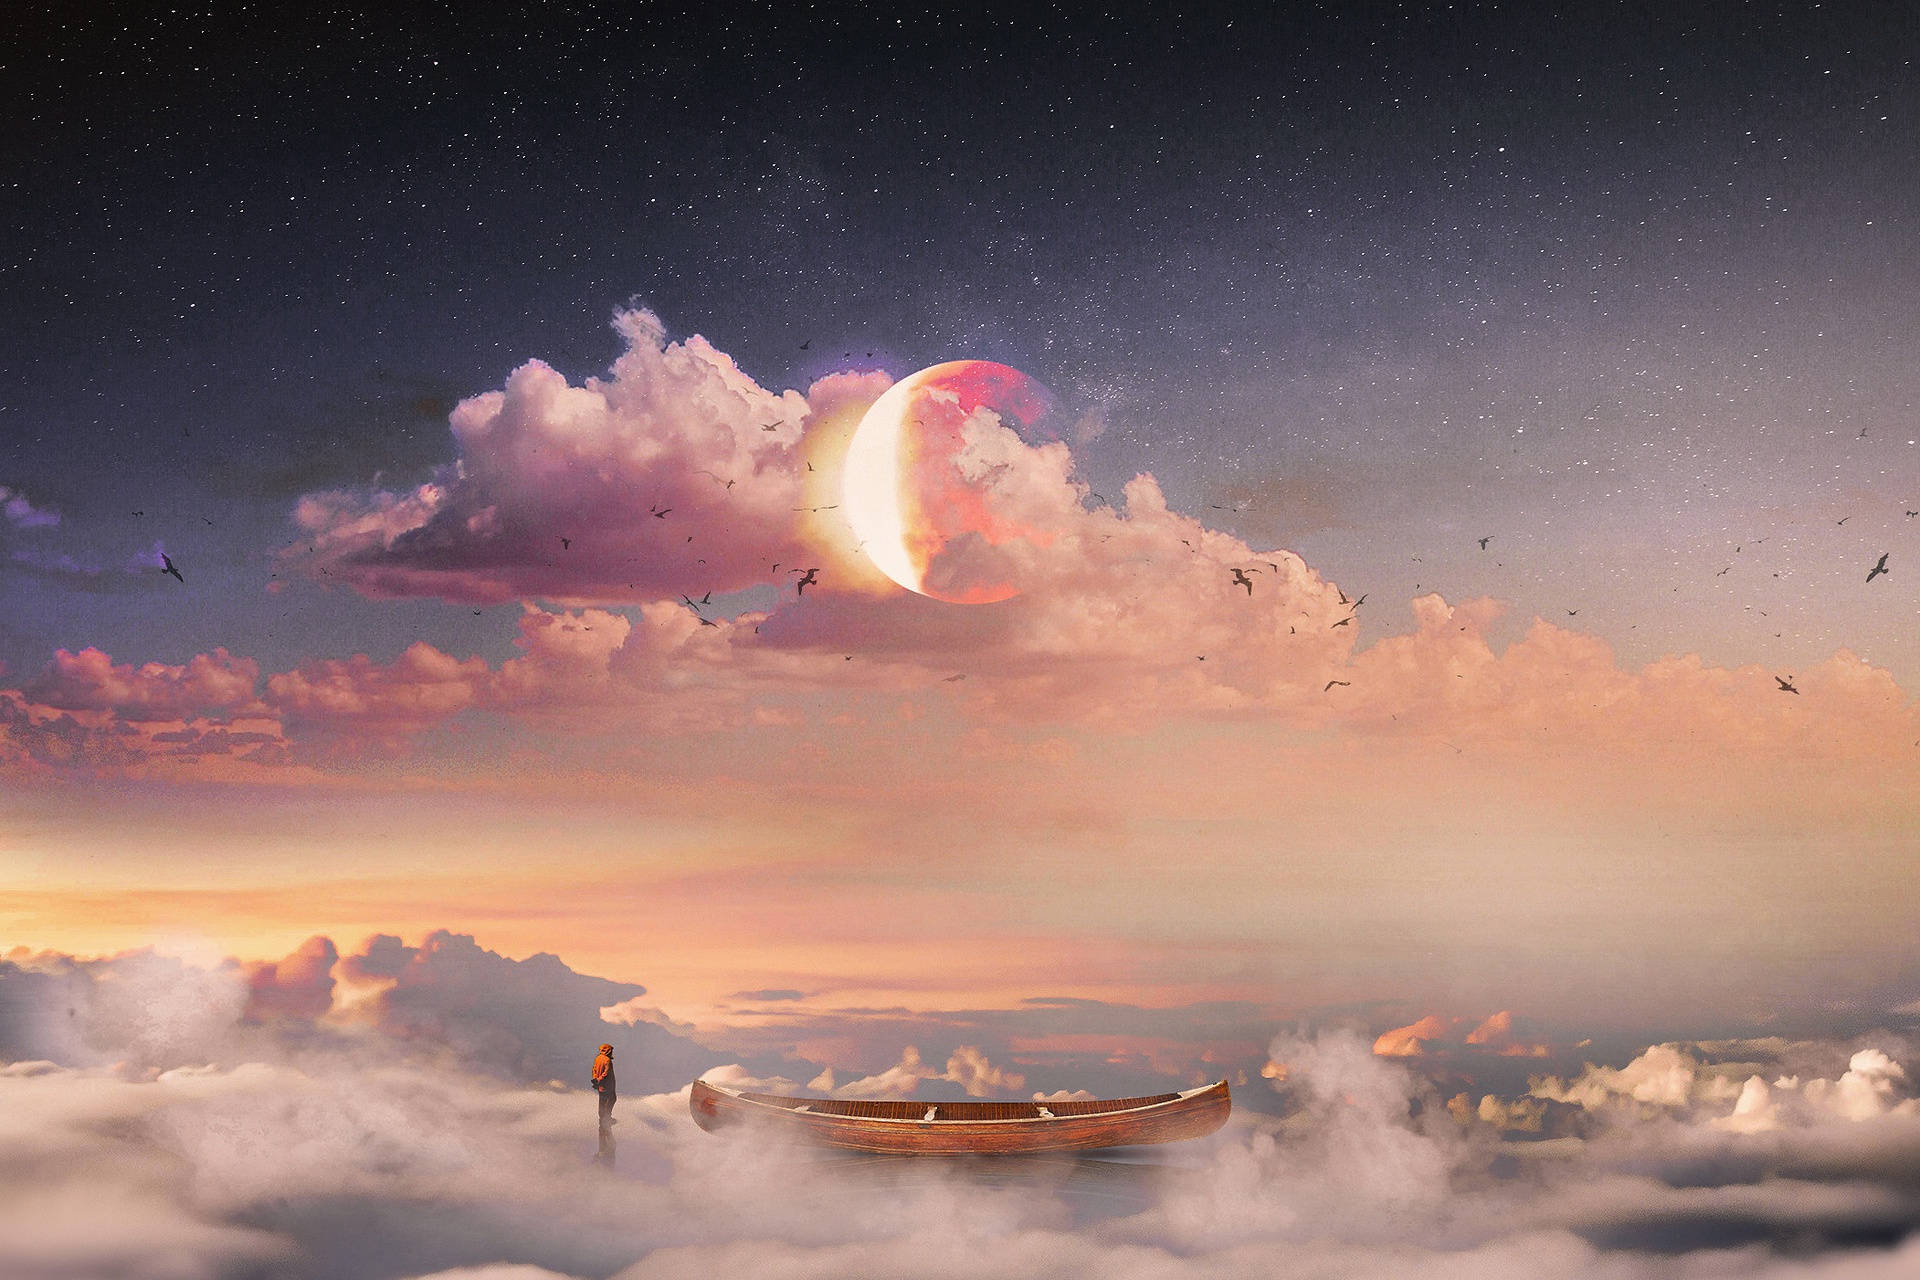 Dream Cloud And Boat Art